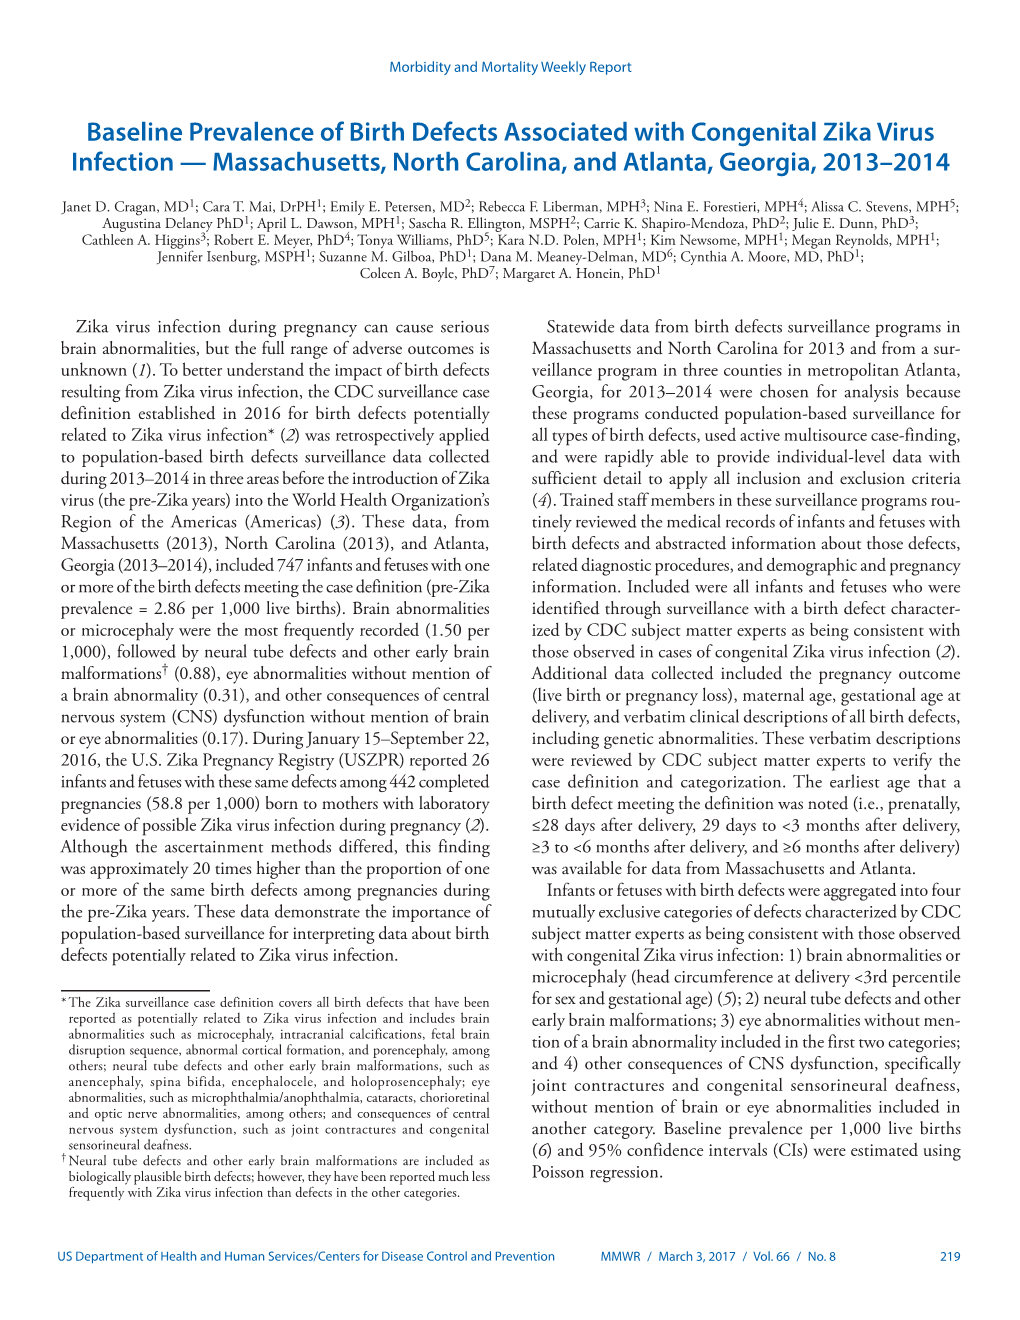 Baseline Prevalence of Birth Defects Associated with Congenital Zika Virus Infection — Massachusetts, North Carolina, and Atlanta, Georgia, 2013–2014